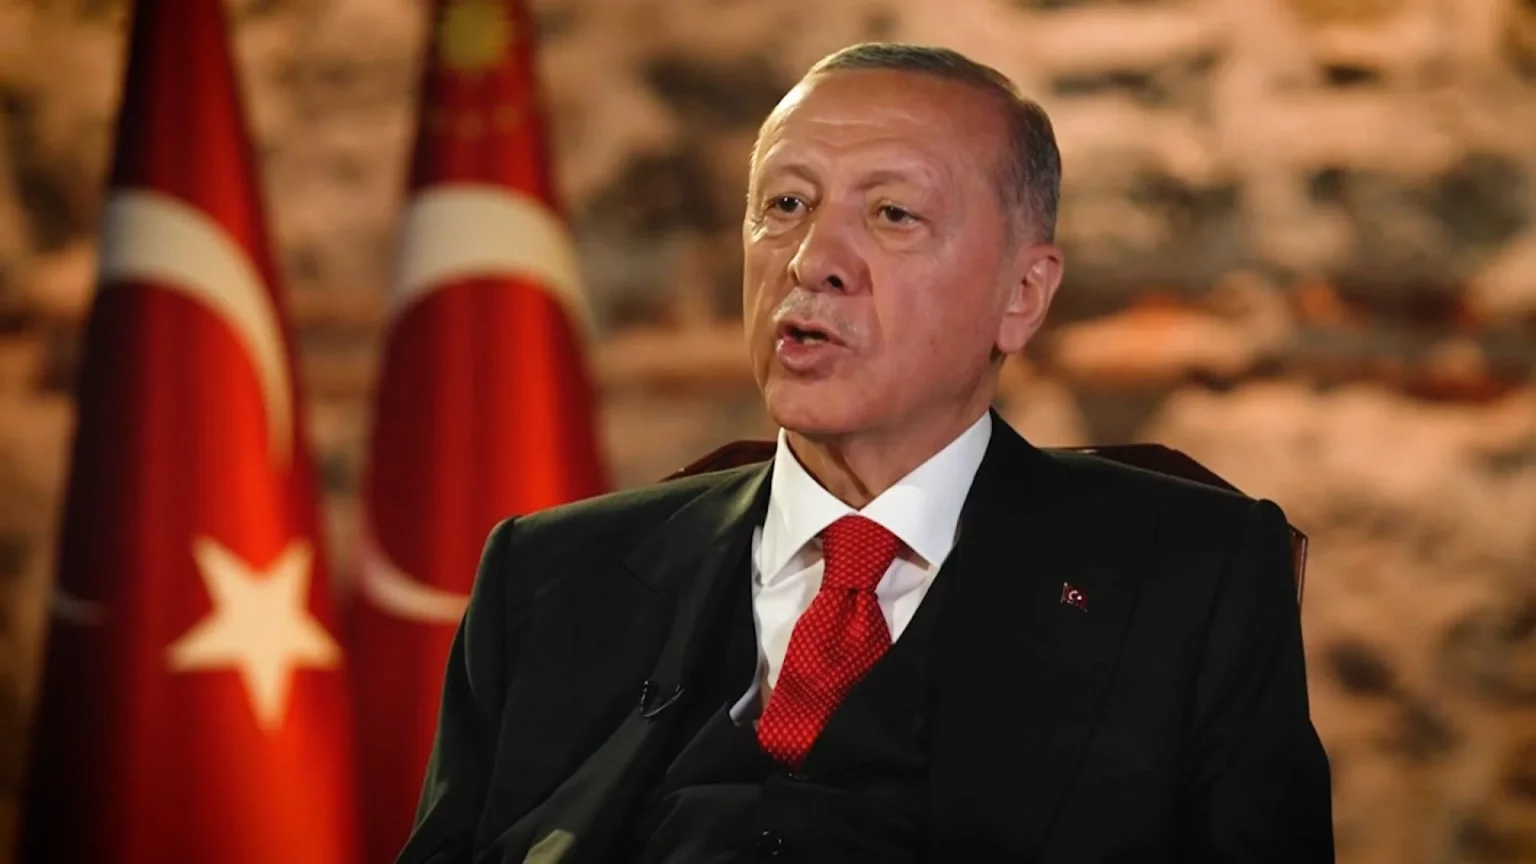 third-place-candidates-endorsement-of-erdogan-in-turkey-runoff-polls-deals-blow-to-oppositions-prospects